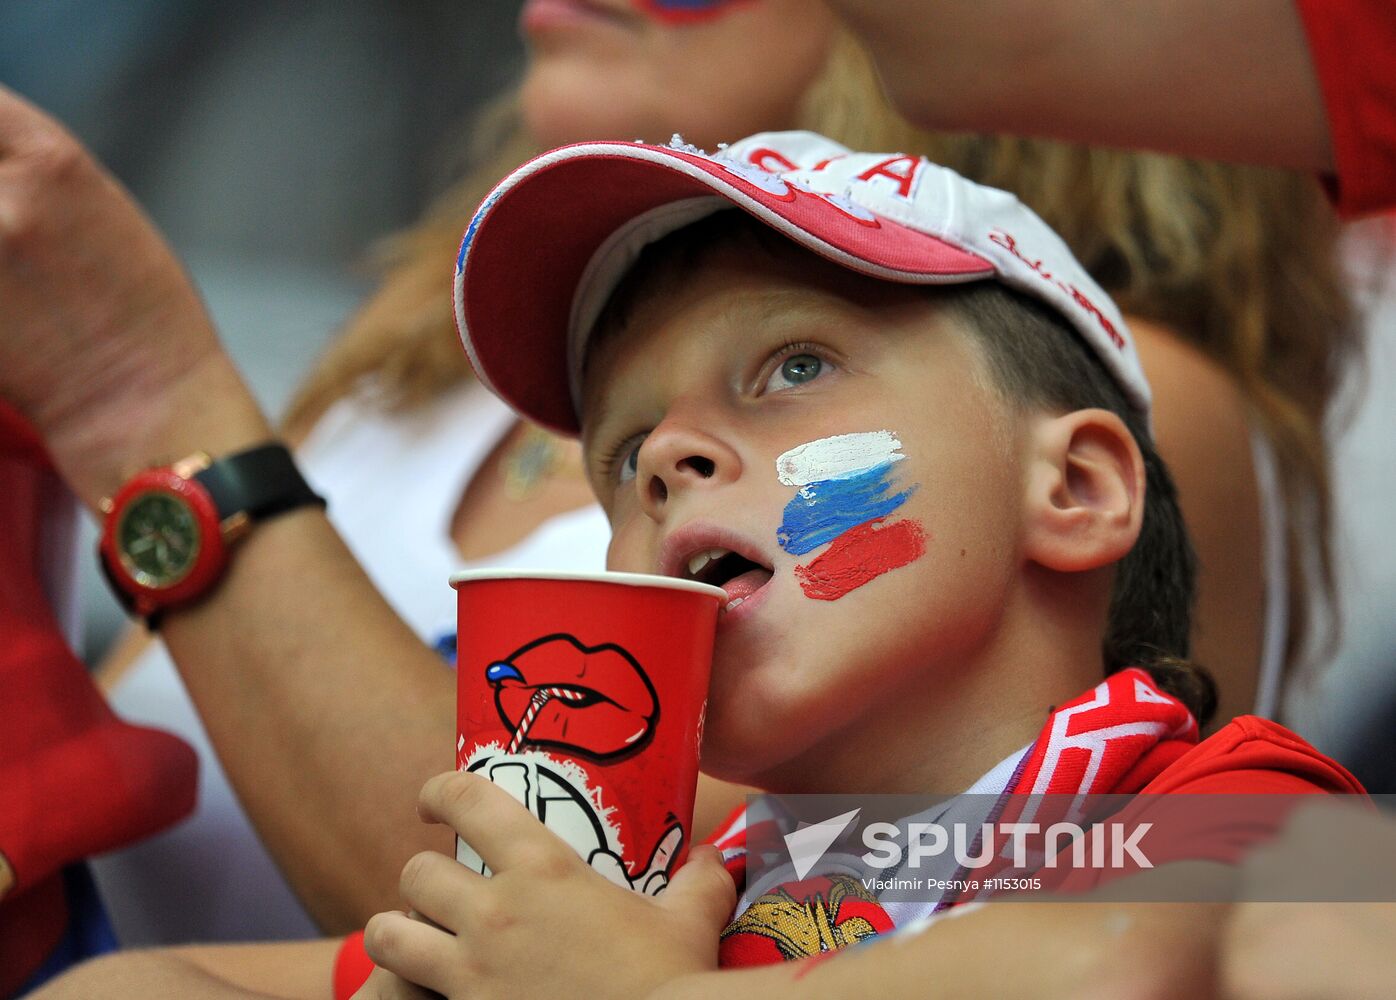 Football Euro 2012. Poland vs. Russia